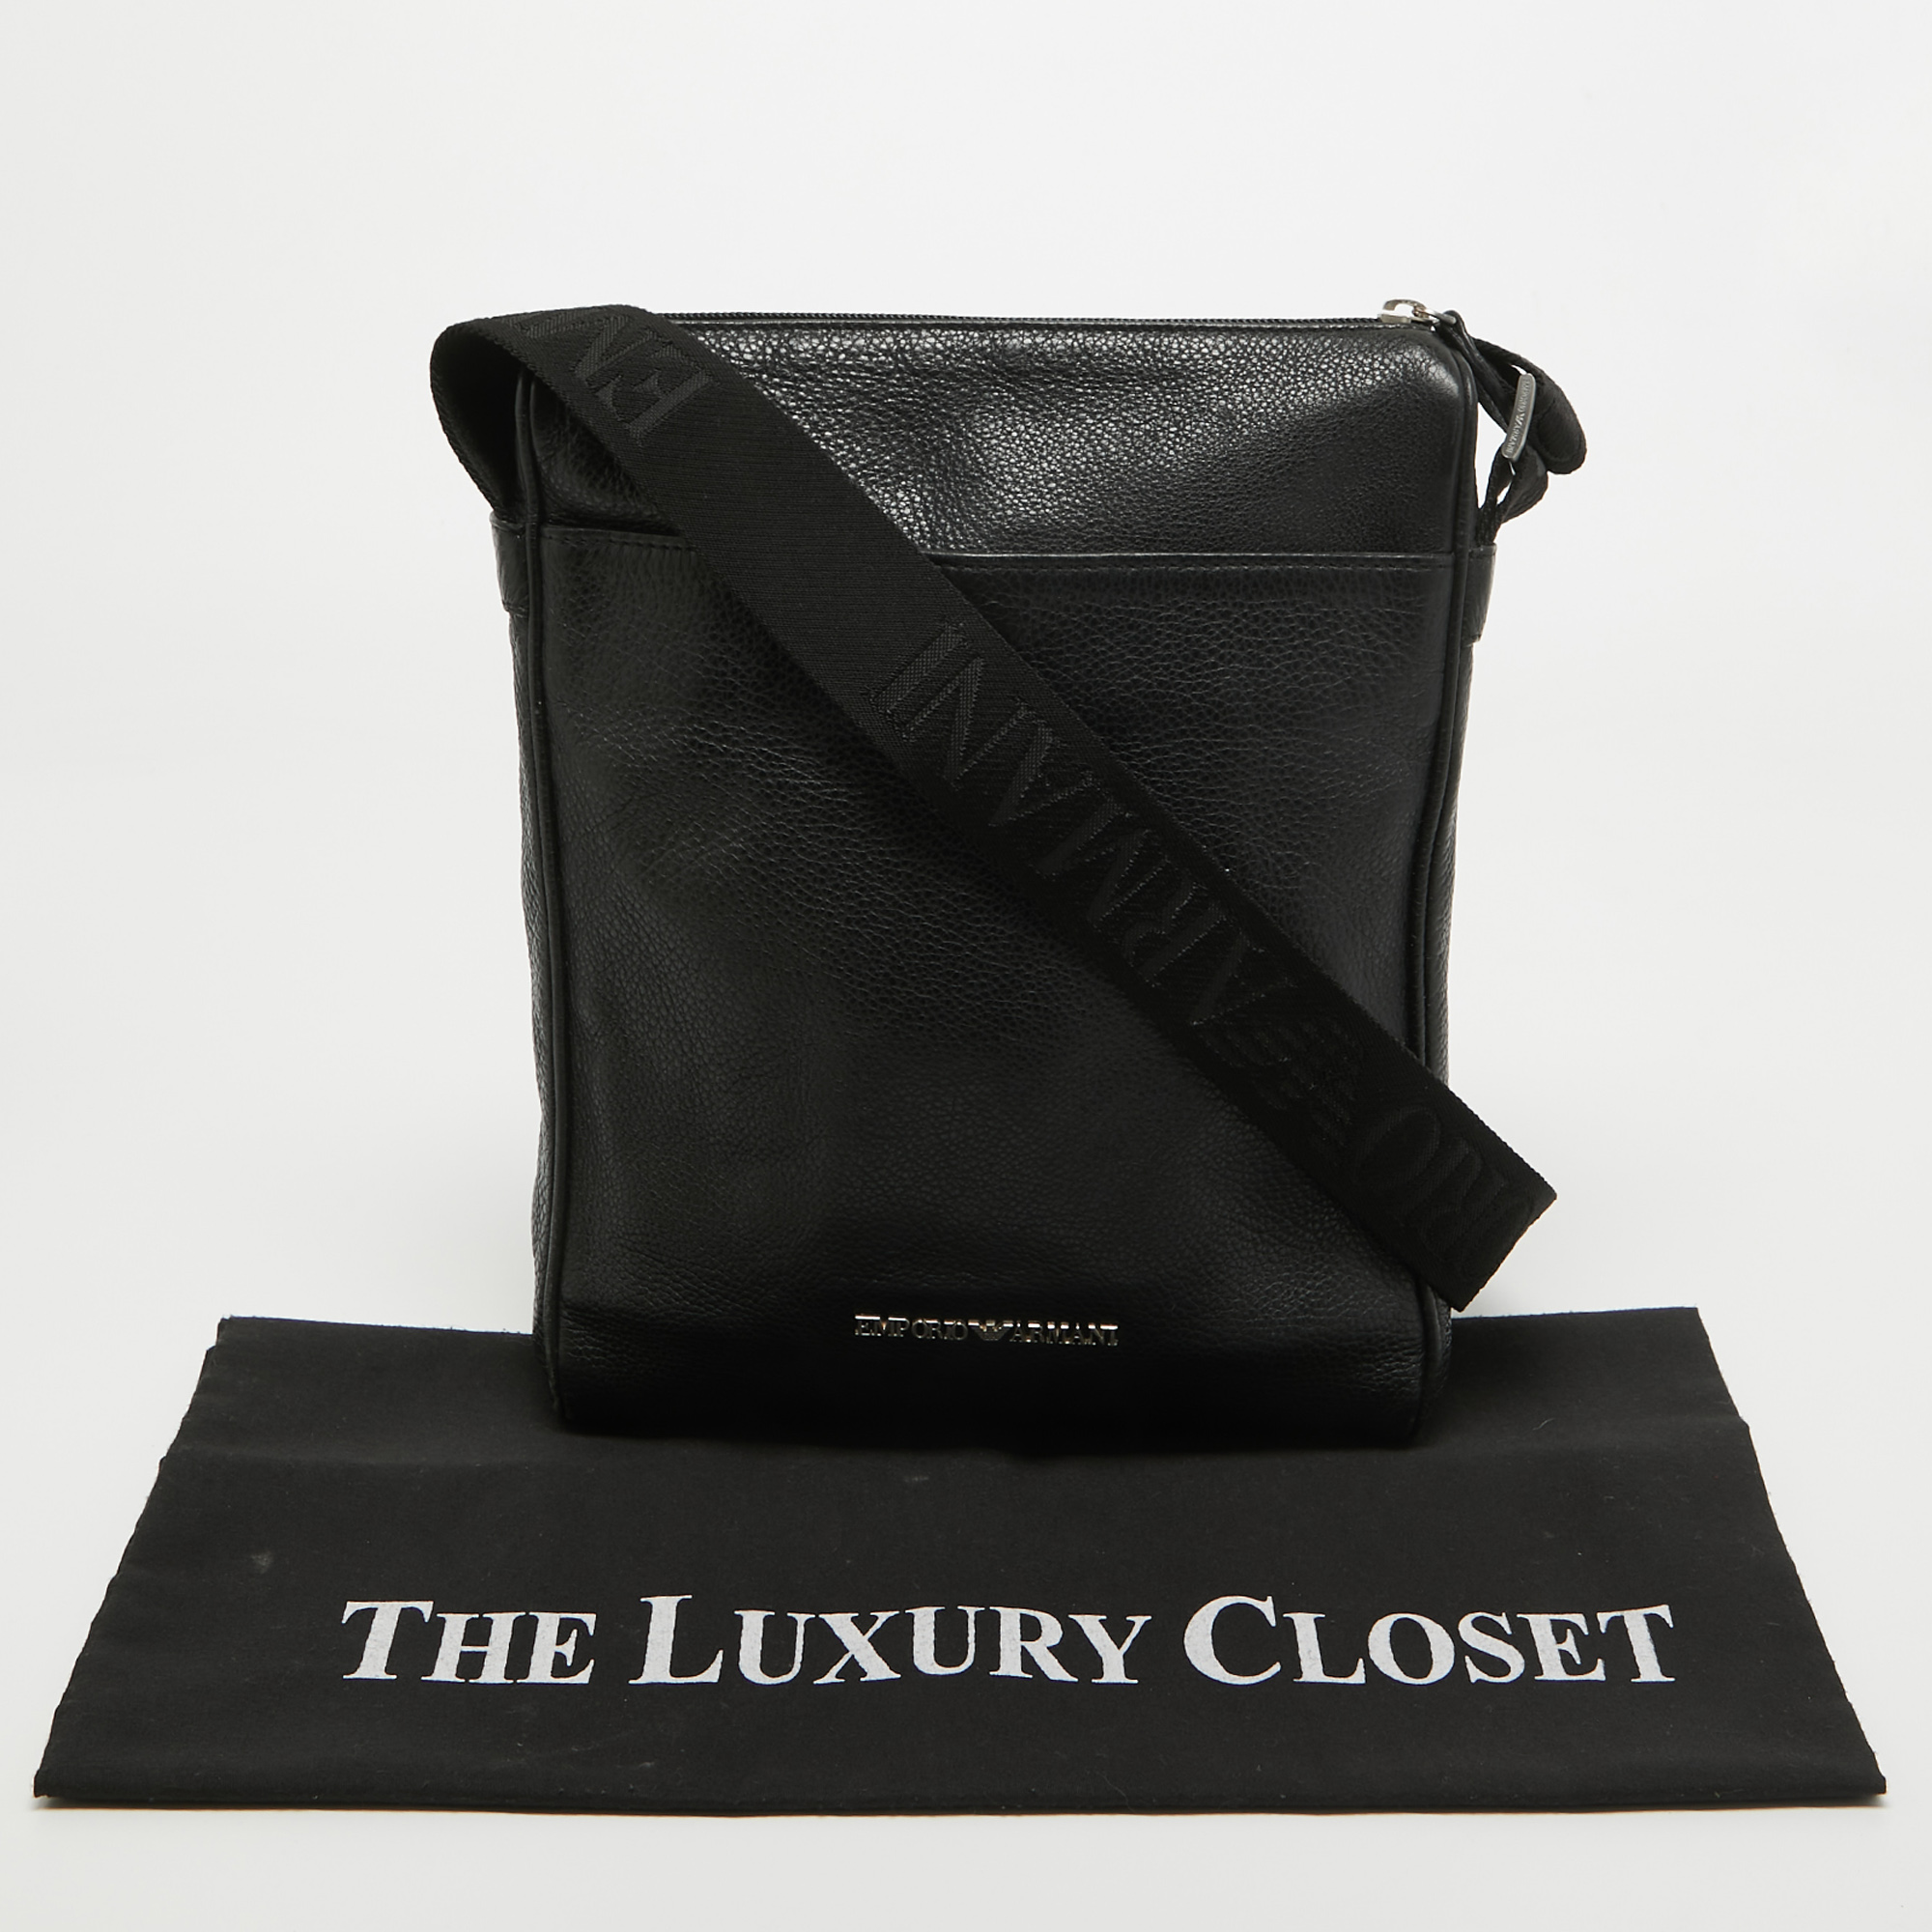 Emporio Armani Black Leather Messenger Bag